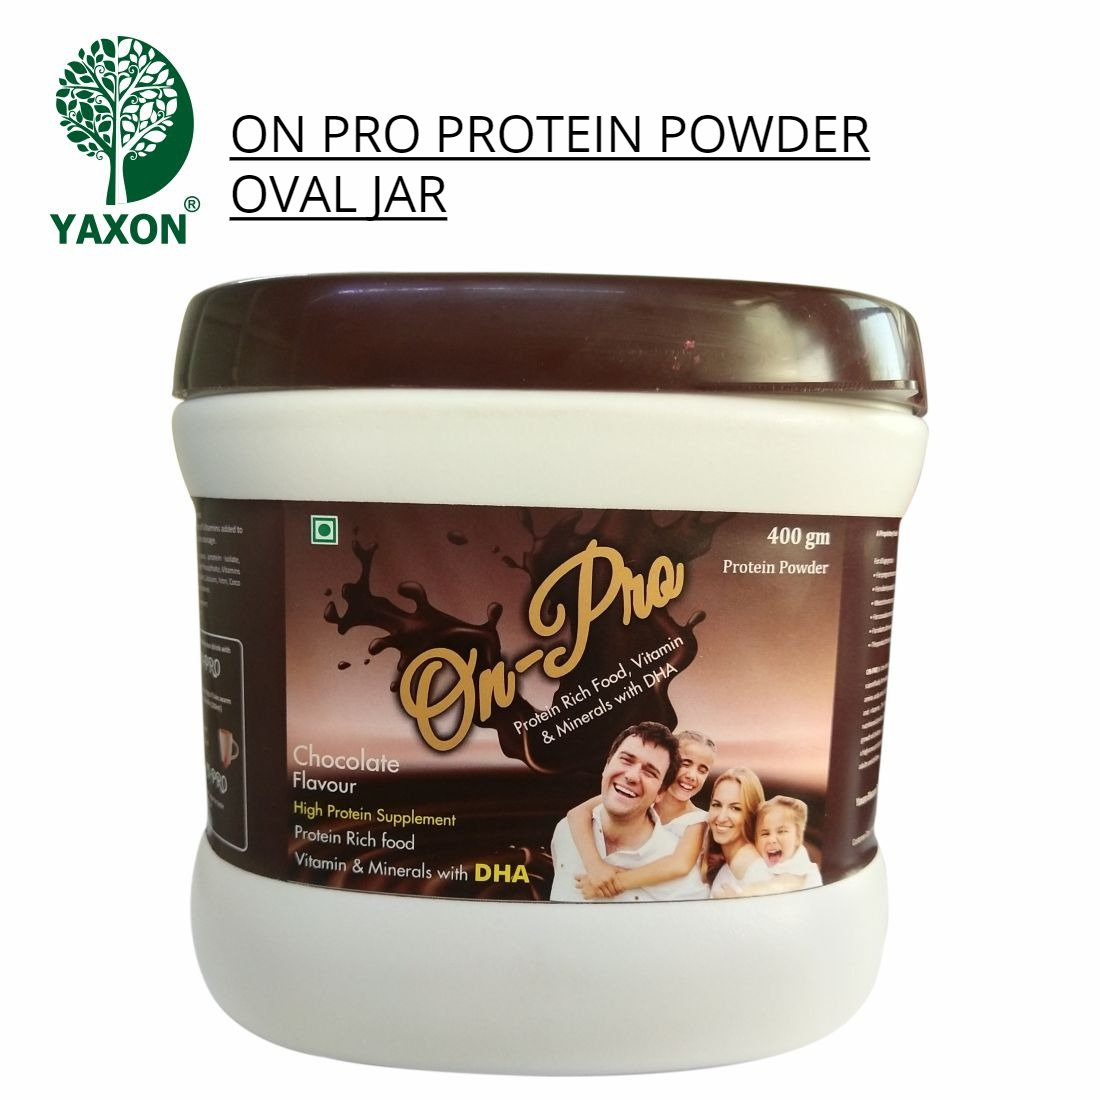 YAXON ON PRO Chocolate Protein Powder Oval Jar